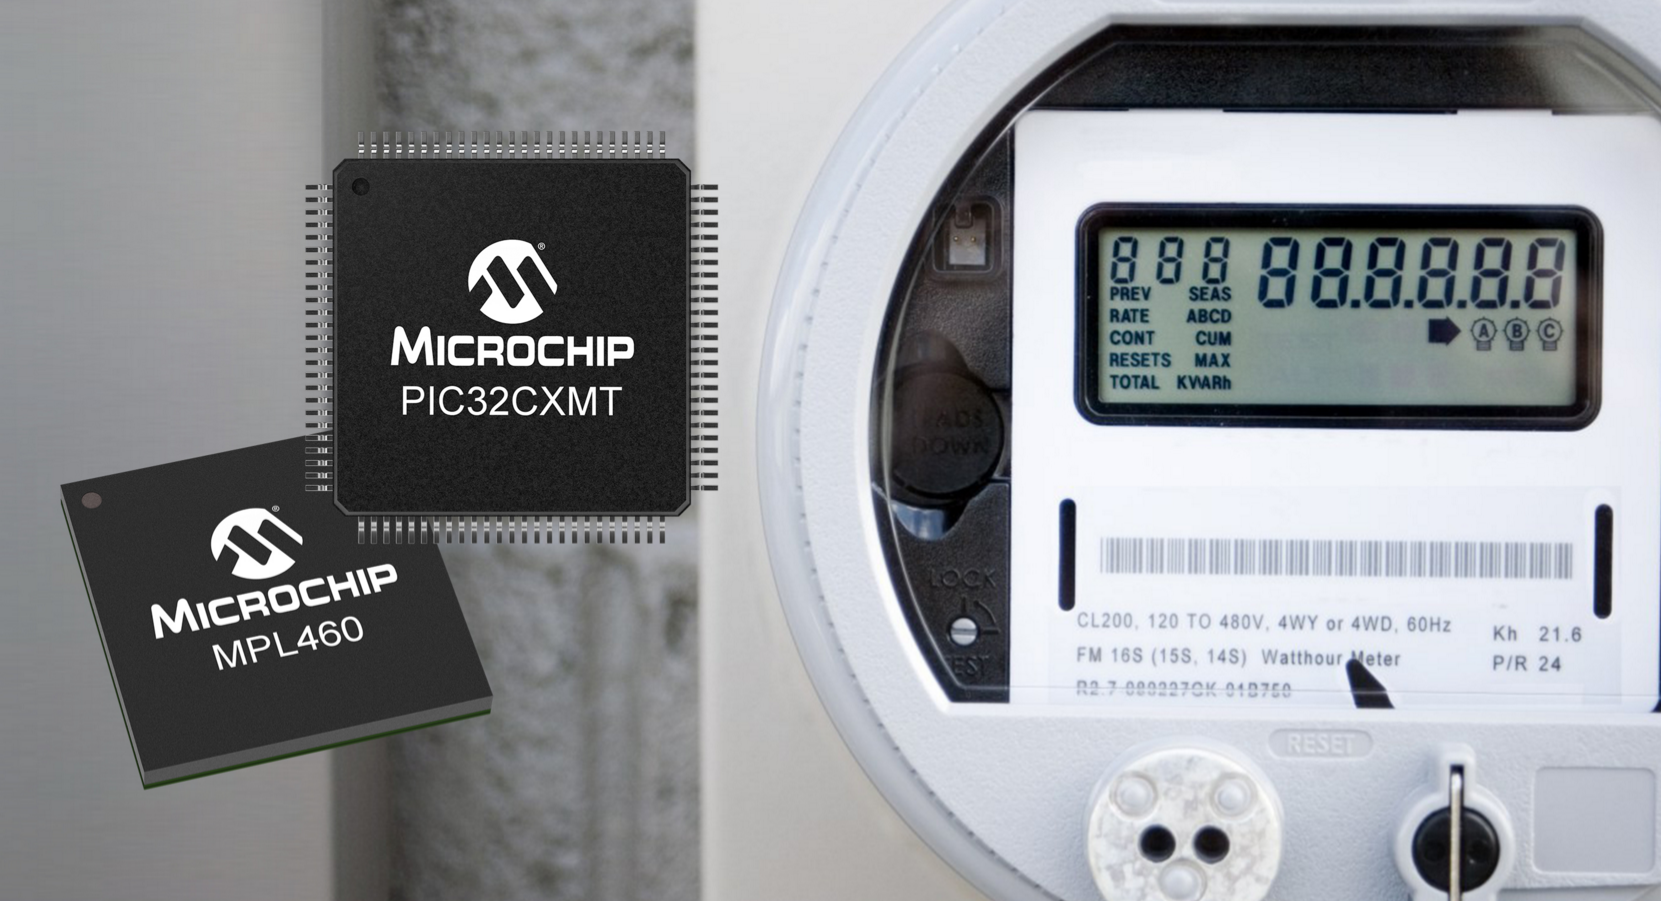 Microchip推出32位单片机PIC32CXMT系列产品，配备MPL460 PLC调制解调器 ，支持智能仪表设计